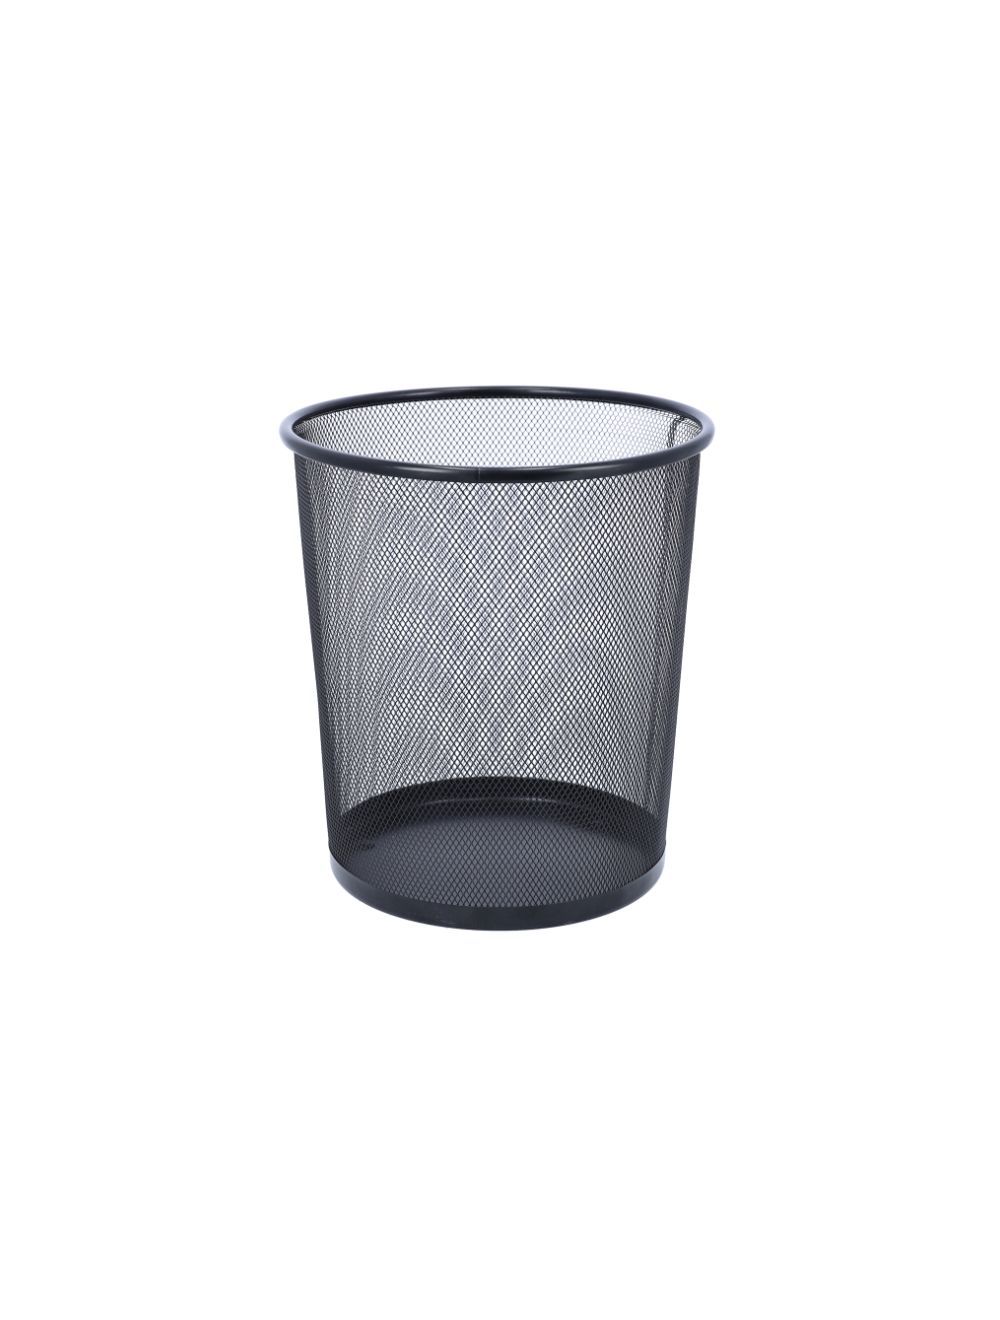 Royalford Mesh Waste Bin - Portable Round Metal Small Trash Can Wastebasket, Garbage Container Bin Paper Bin